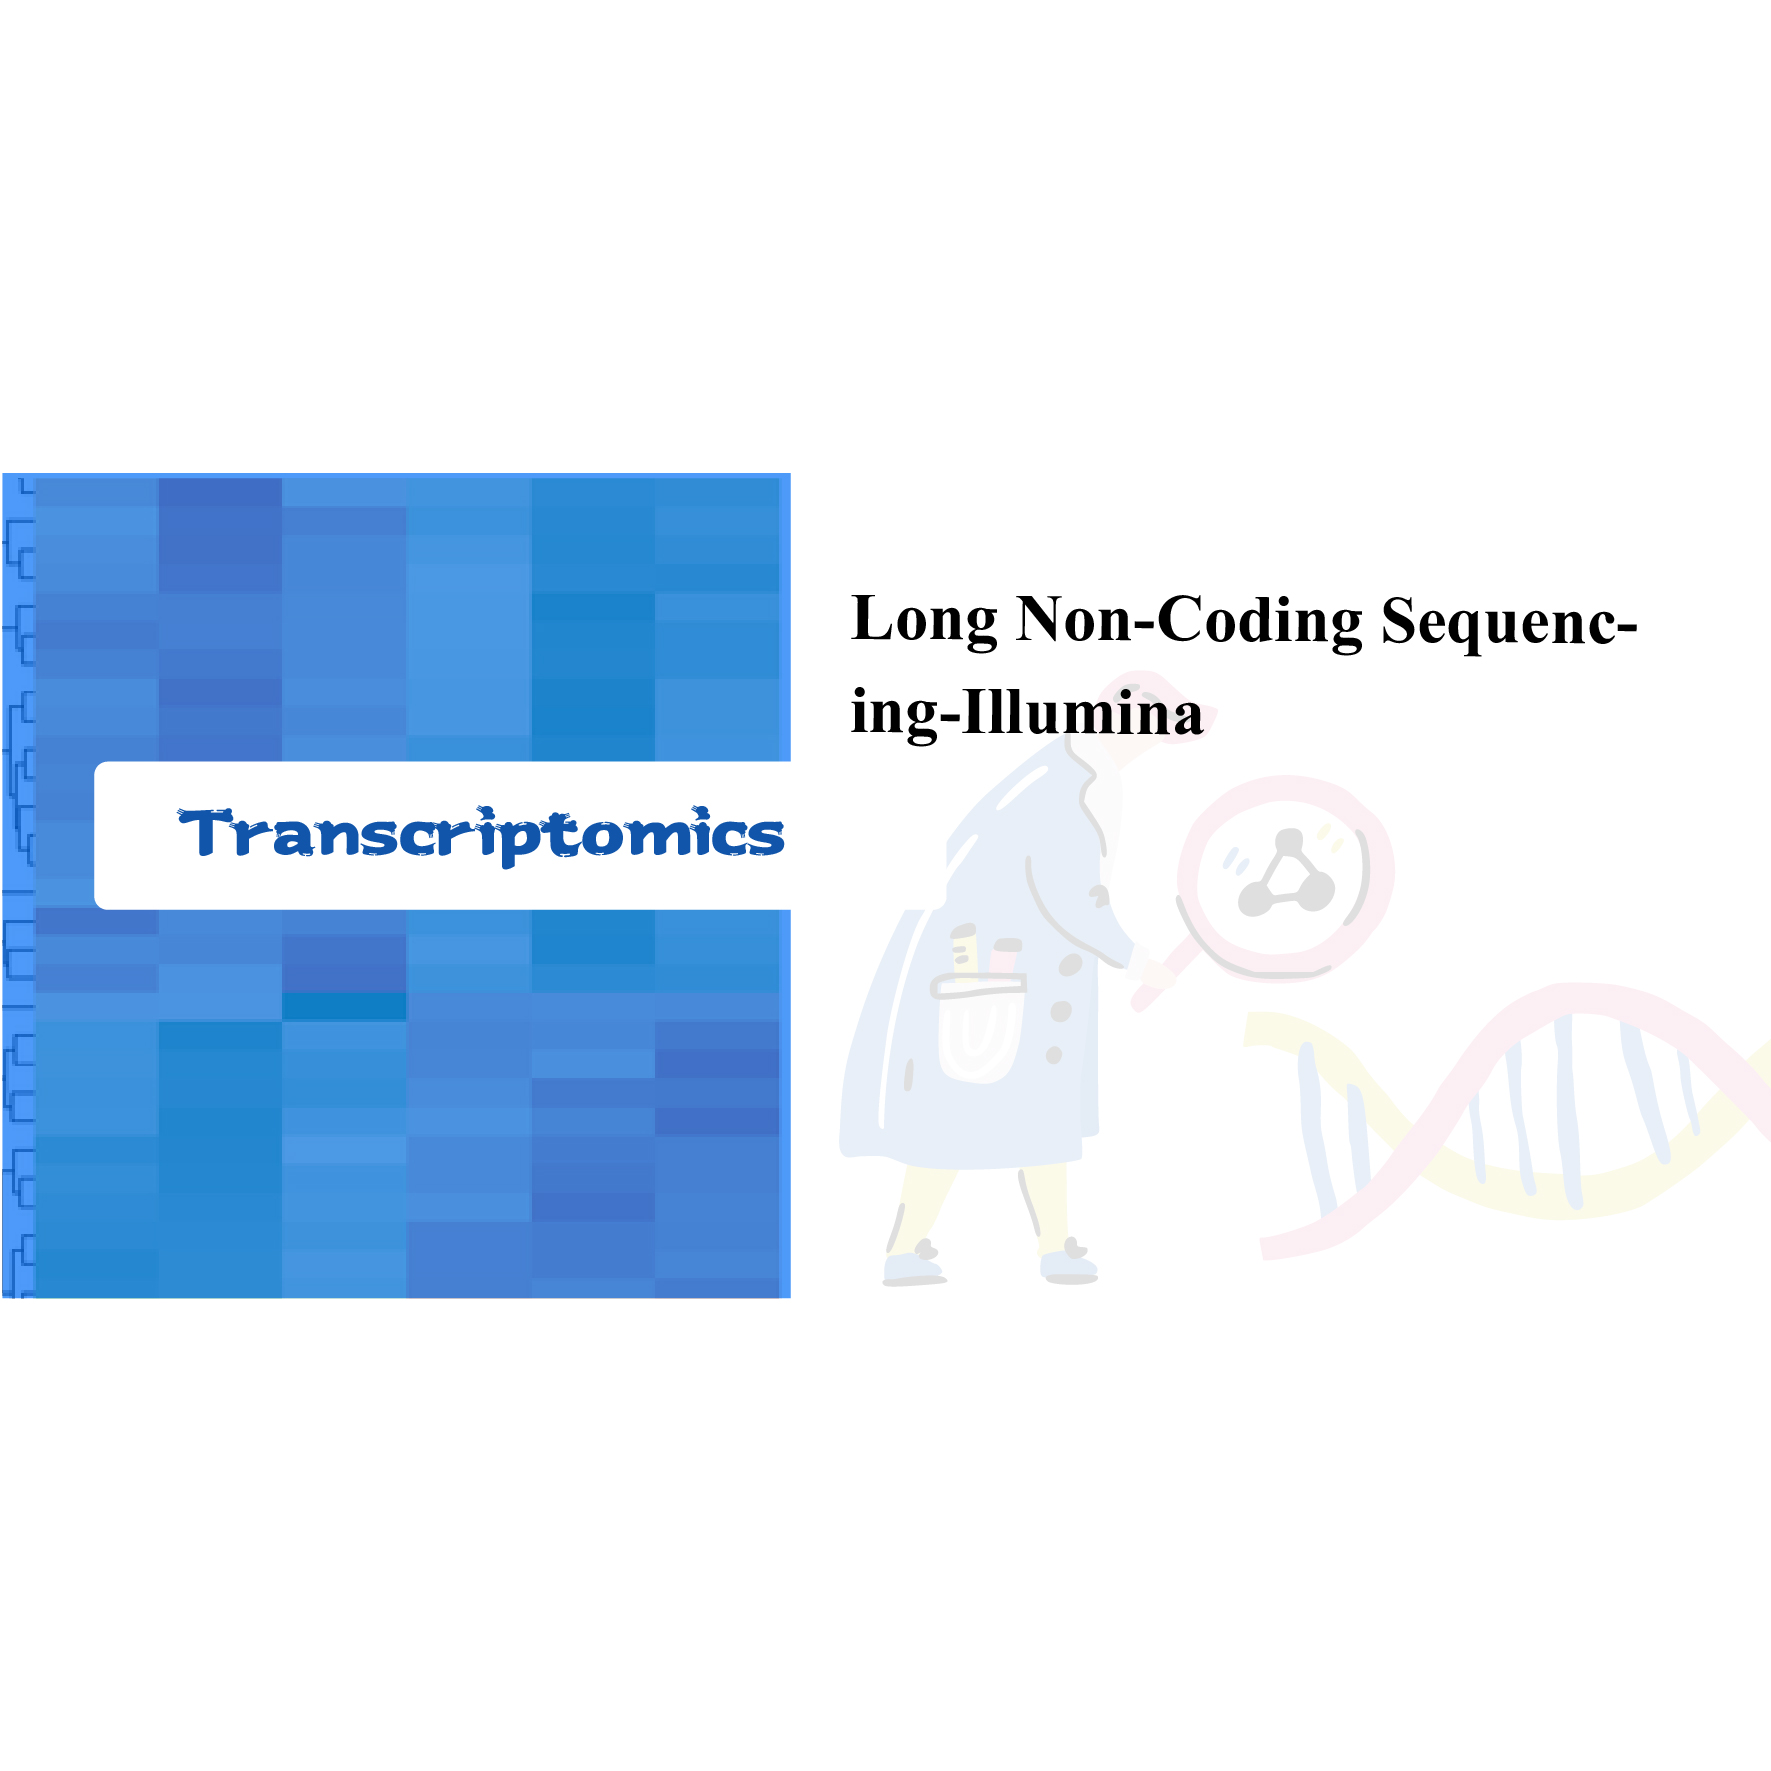 Laang net-coding sequencing-Illumina